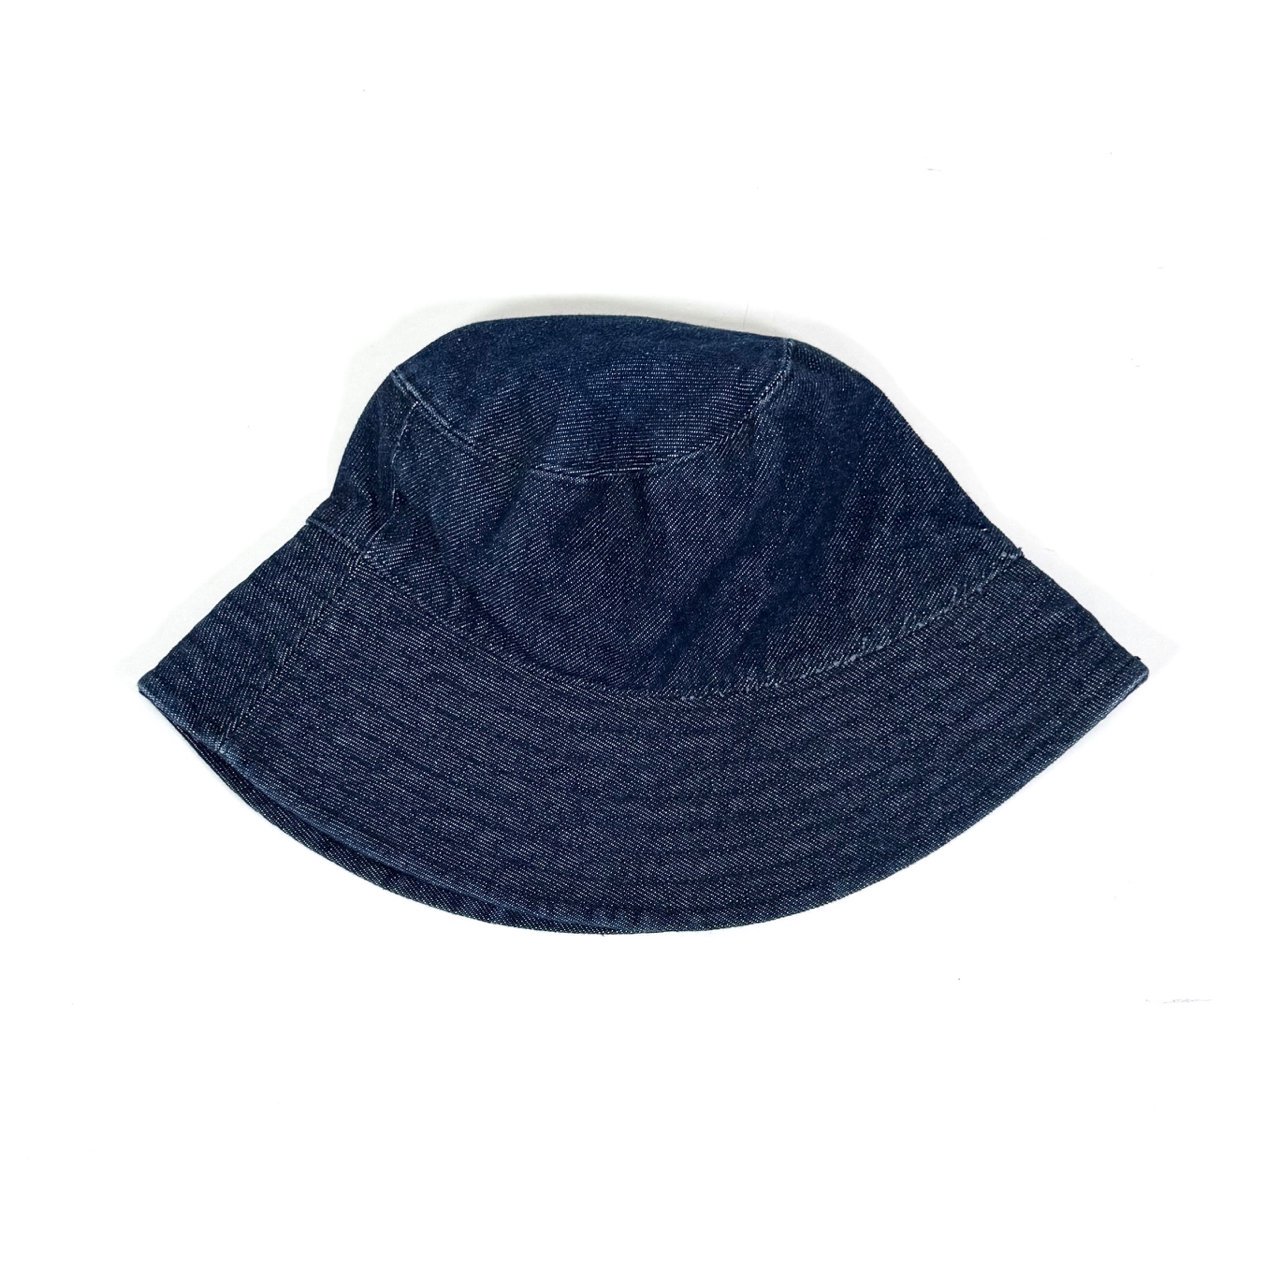 1990s BANANA REPUBLIC Denim bucket hat S/M MADE IN ITALY Dark indigo